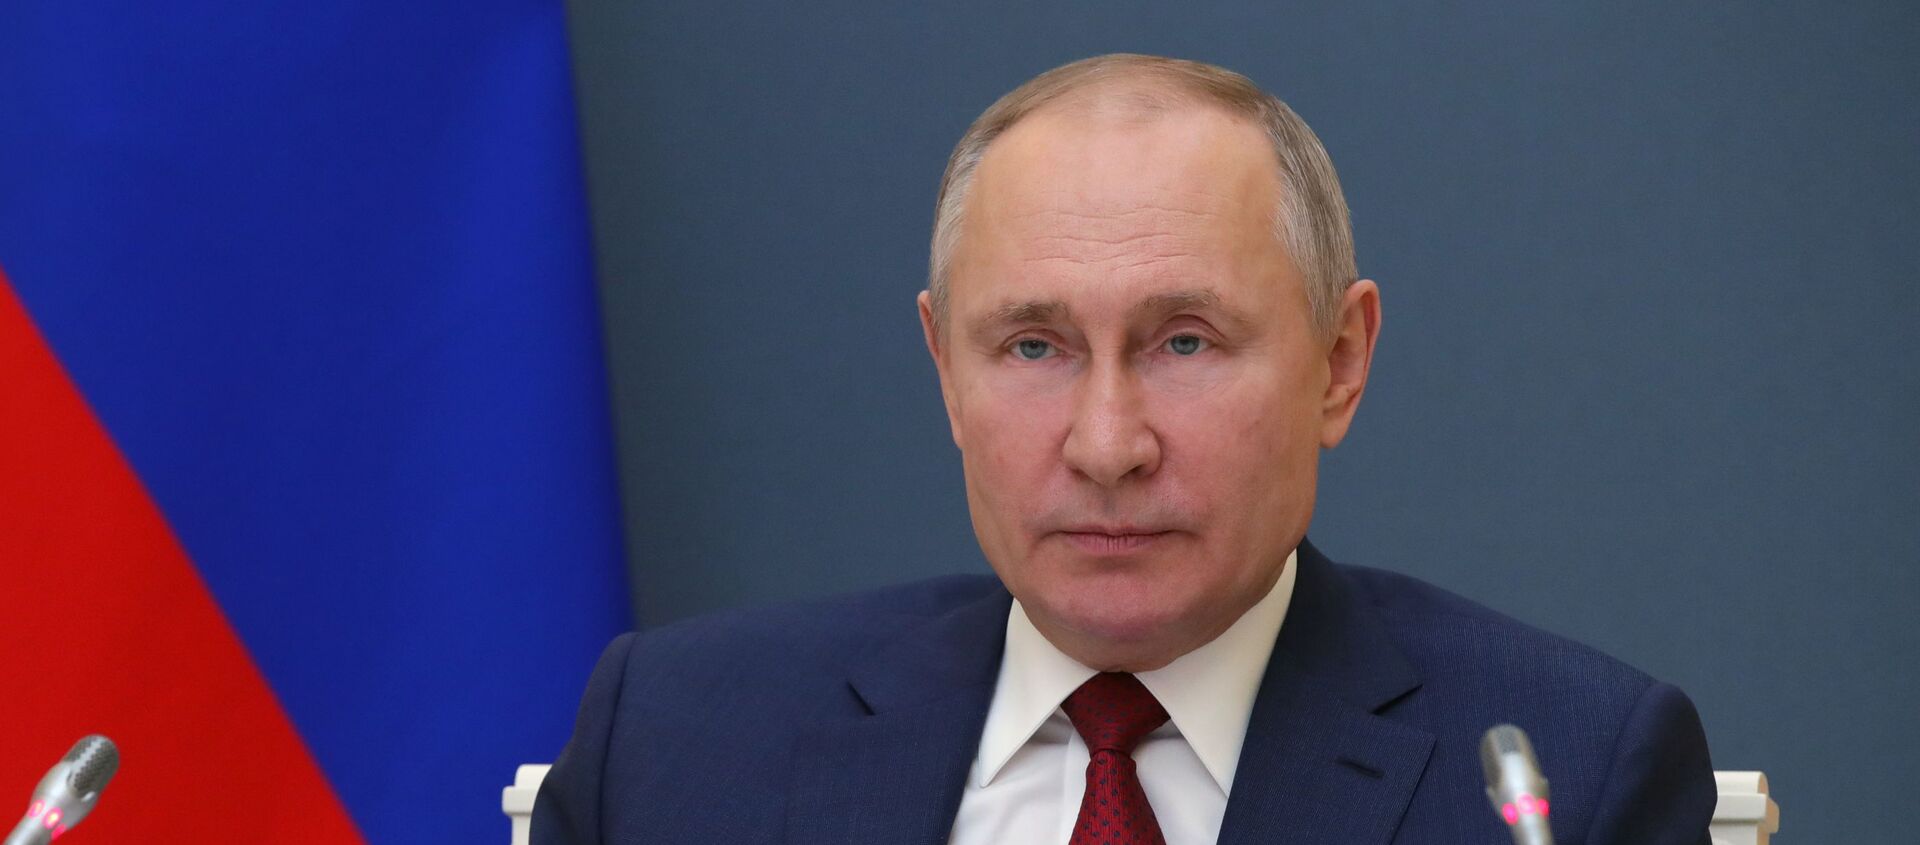 Президент РФ В. Путин выступил на сессии онлайн-форума Давосская повестка дня 2021 - Sputnik Армения, 1920, 23.03.2021